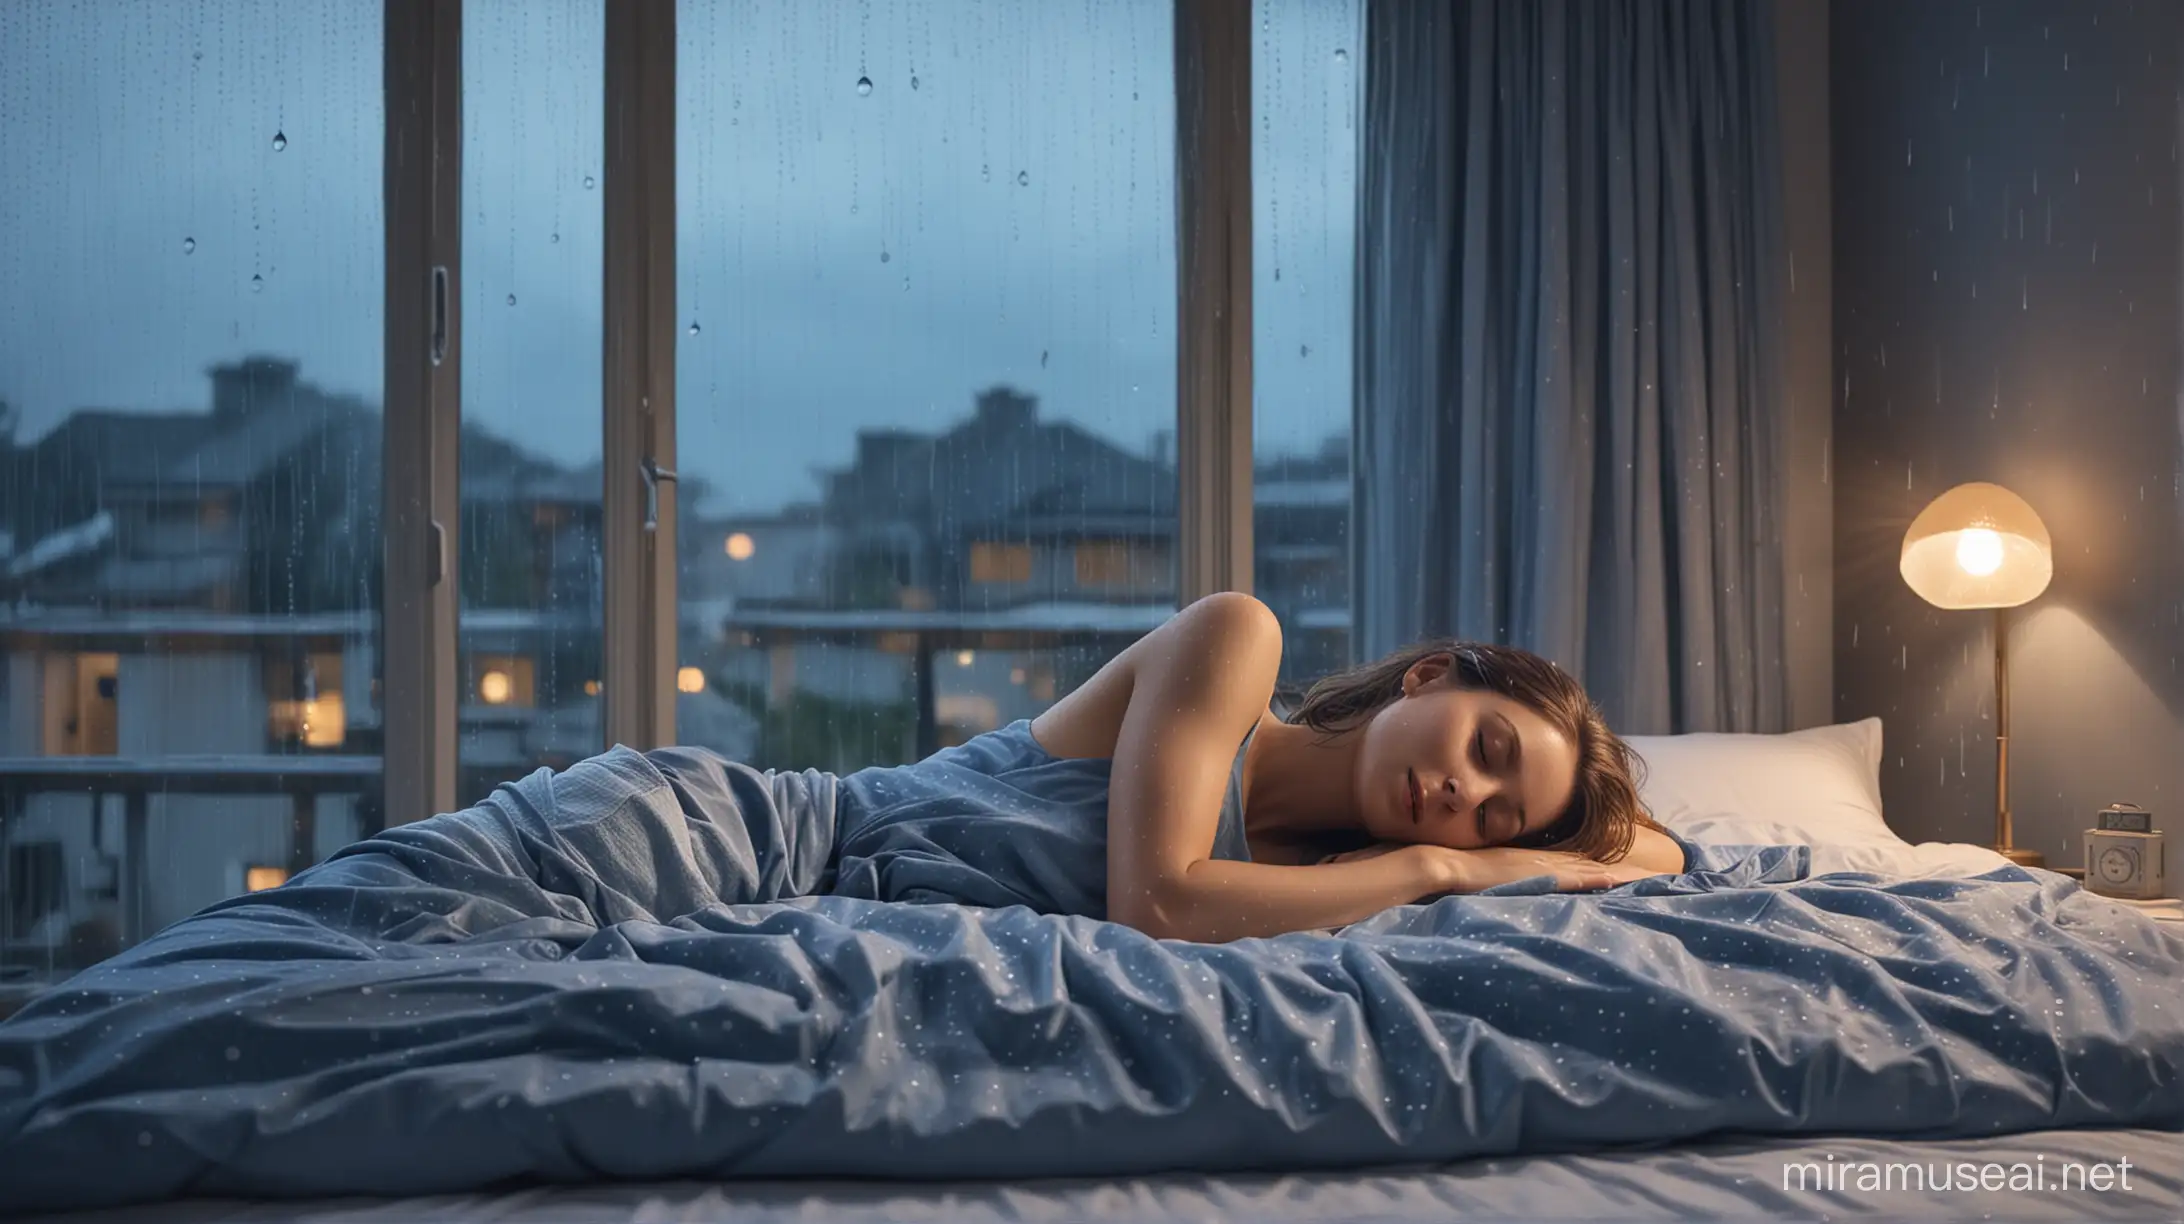 Tranquil Woman Sleeping by Rainy Window in BlueToned Bedroom